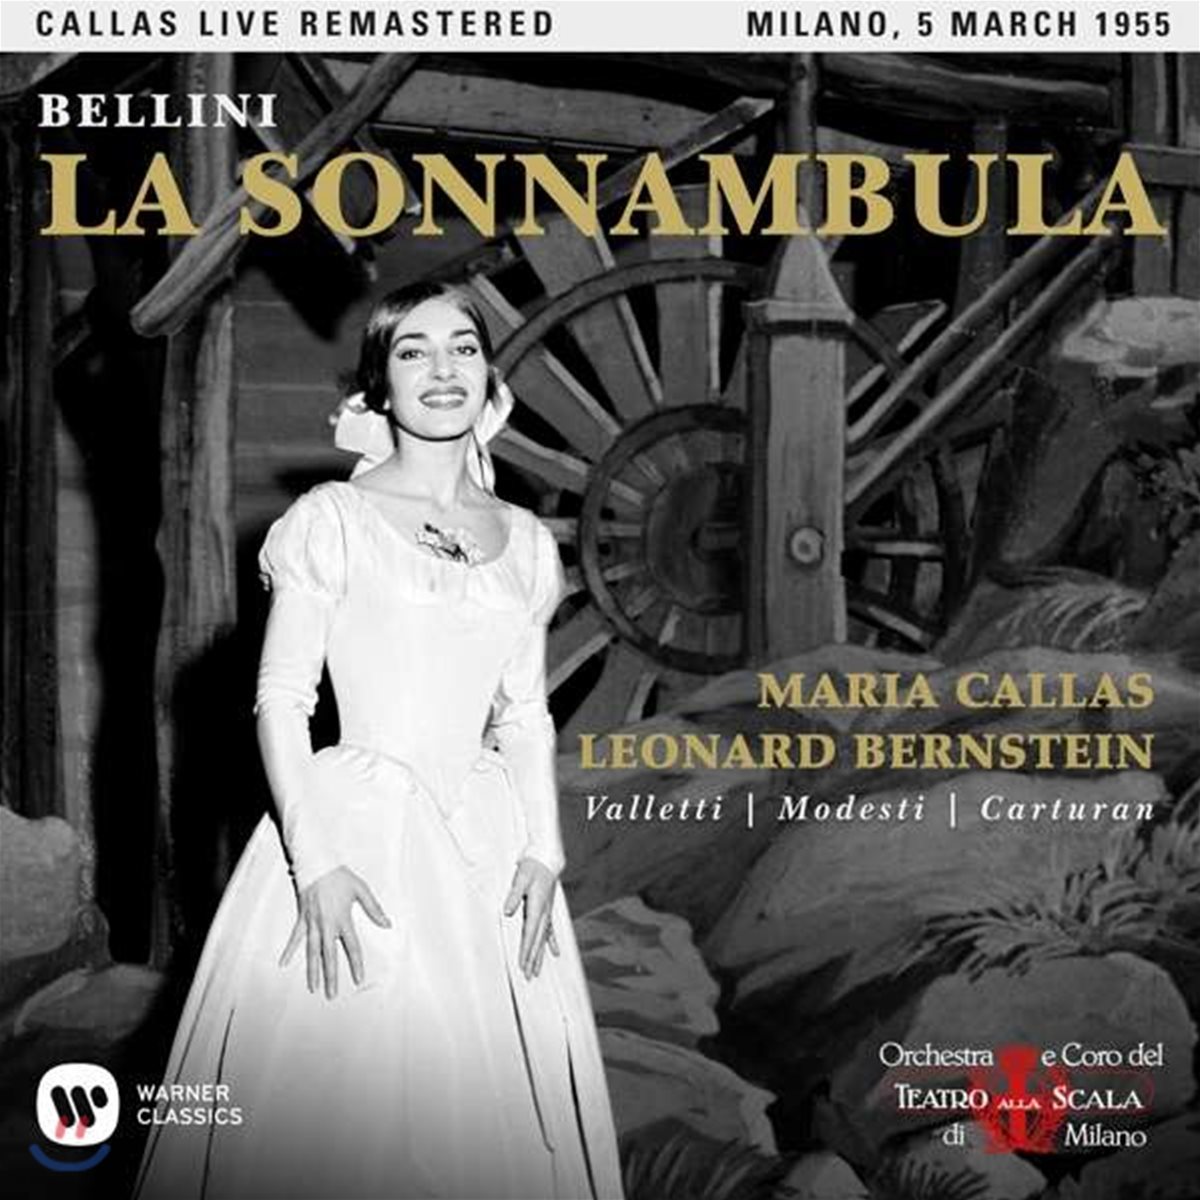 Maria Callas / Leonard Bernstein 벨리니: 몽유병의 여인 - 마리아 칼라스, 레너드 번스타인 / 1955 밀라노 라 스칼라 실황 (Bellini: La Sonnambula)